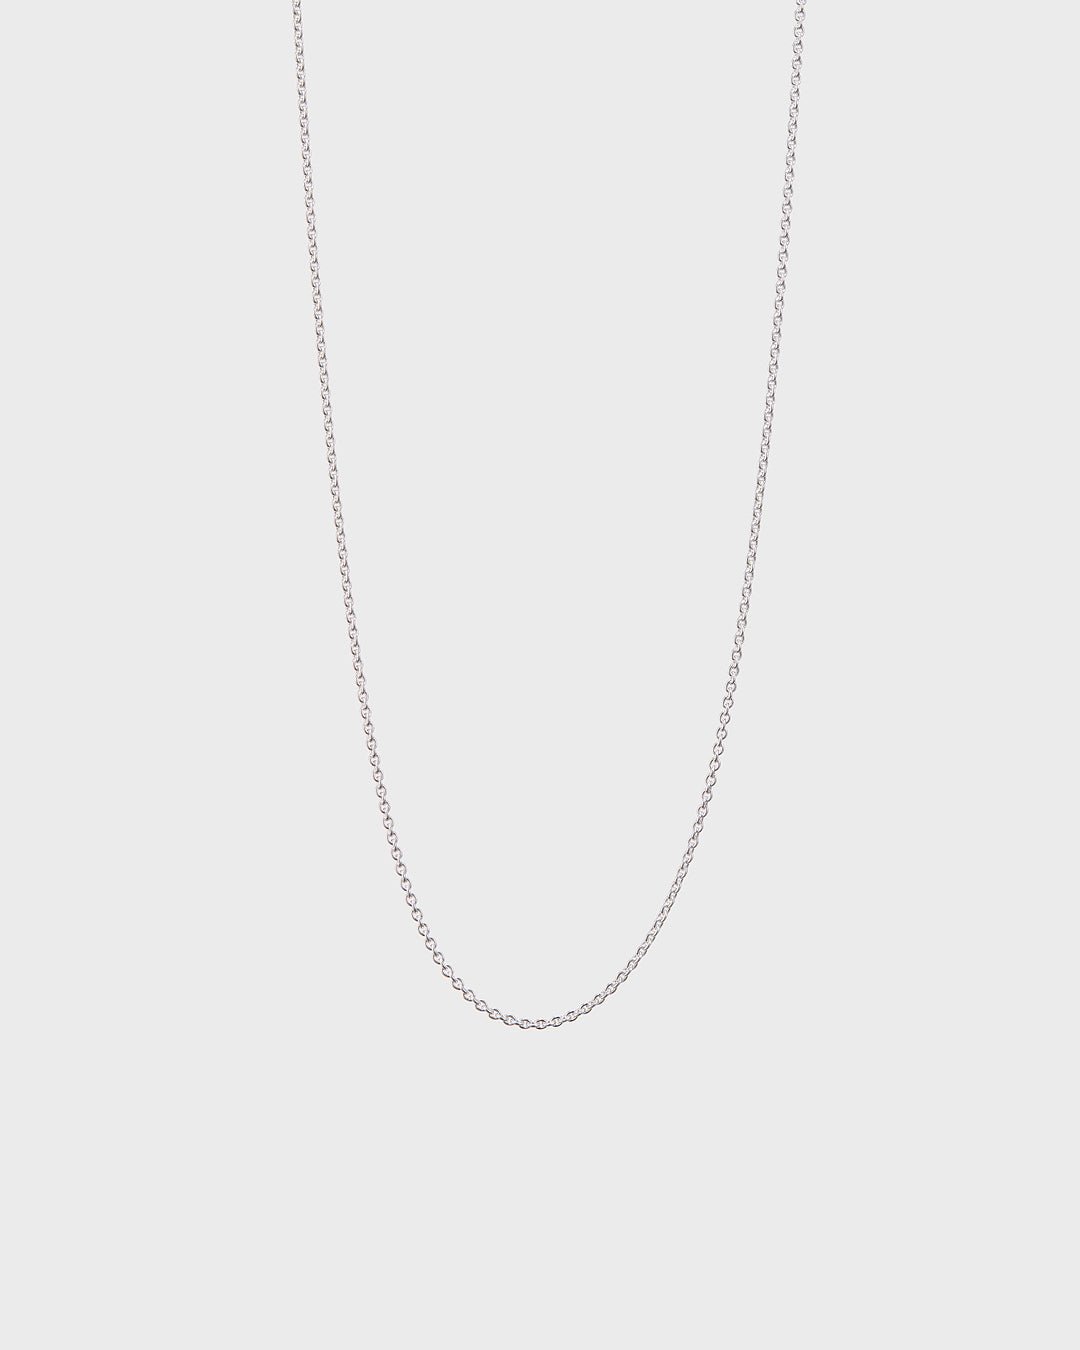 Amulet Chain 40-60cm adjustable silver